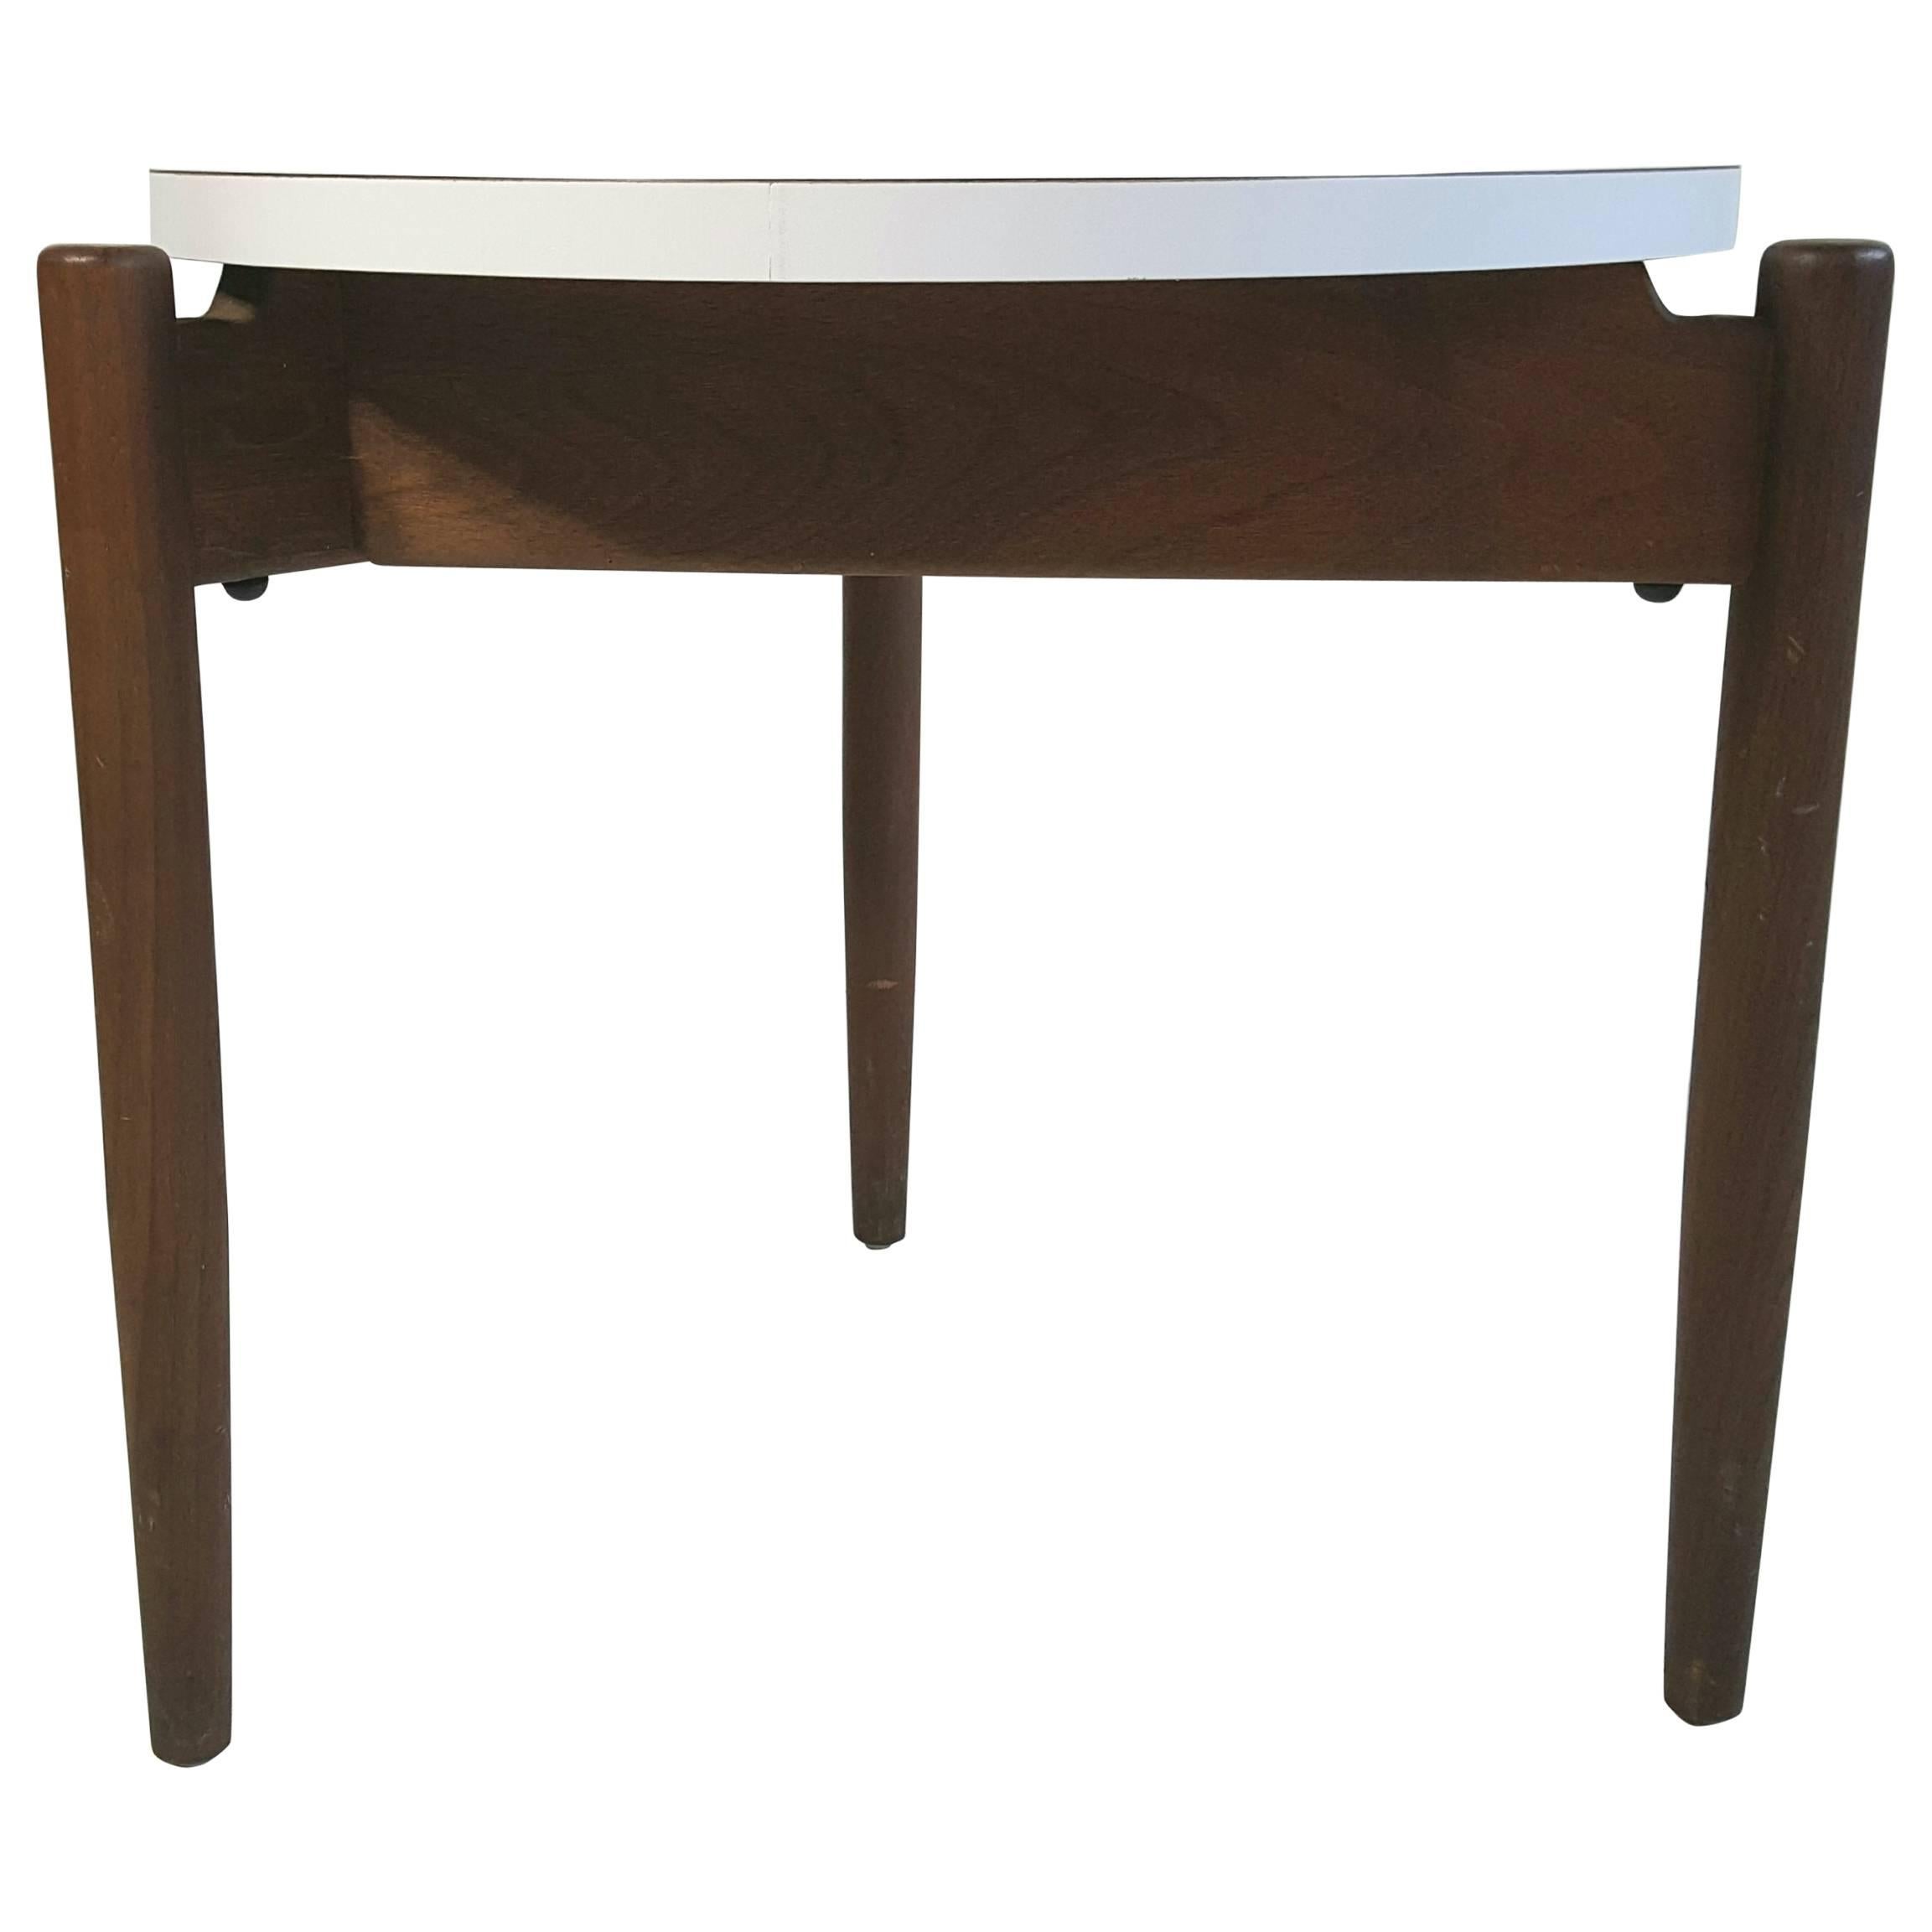 Modernist Side Table, Walnut and Laminate, Designed by Jens Risom